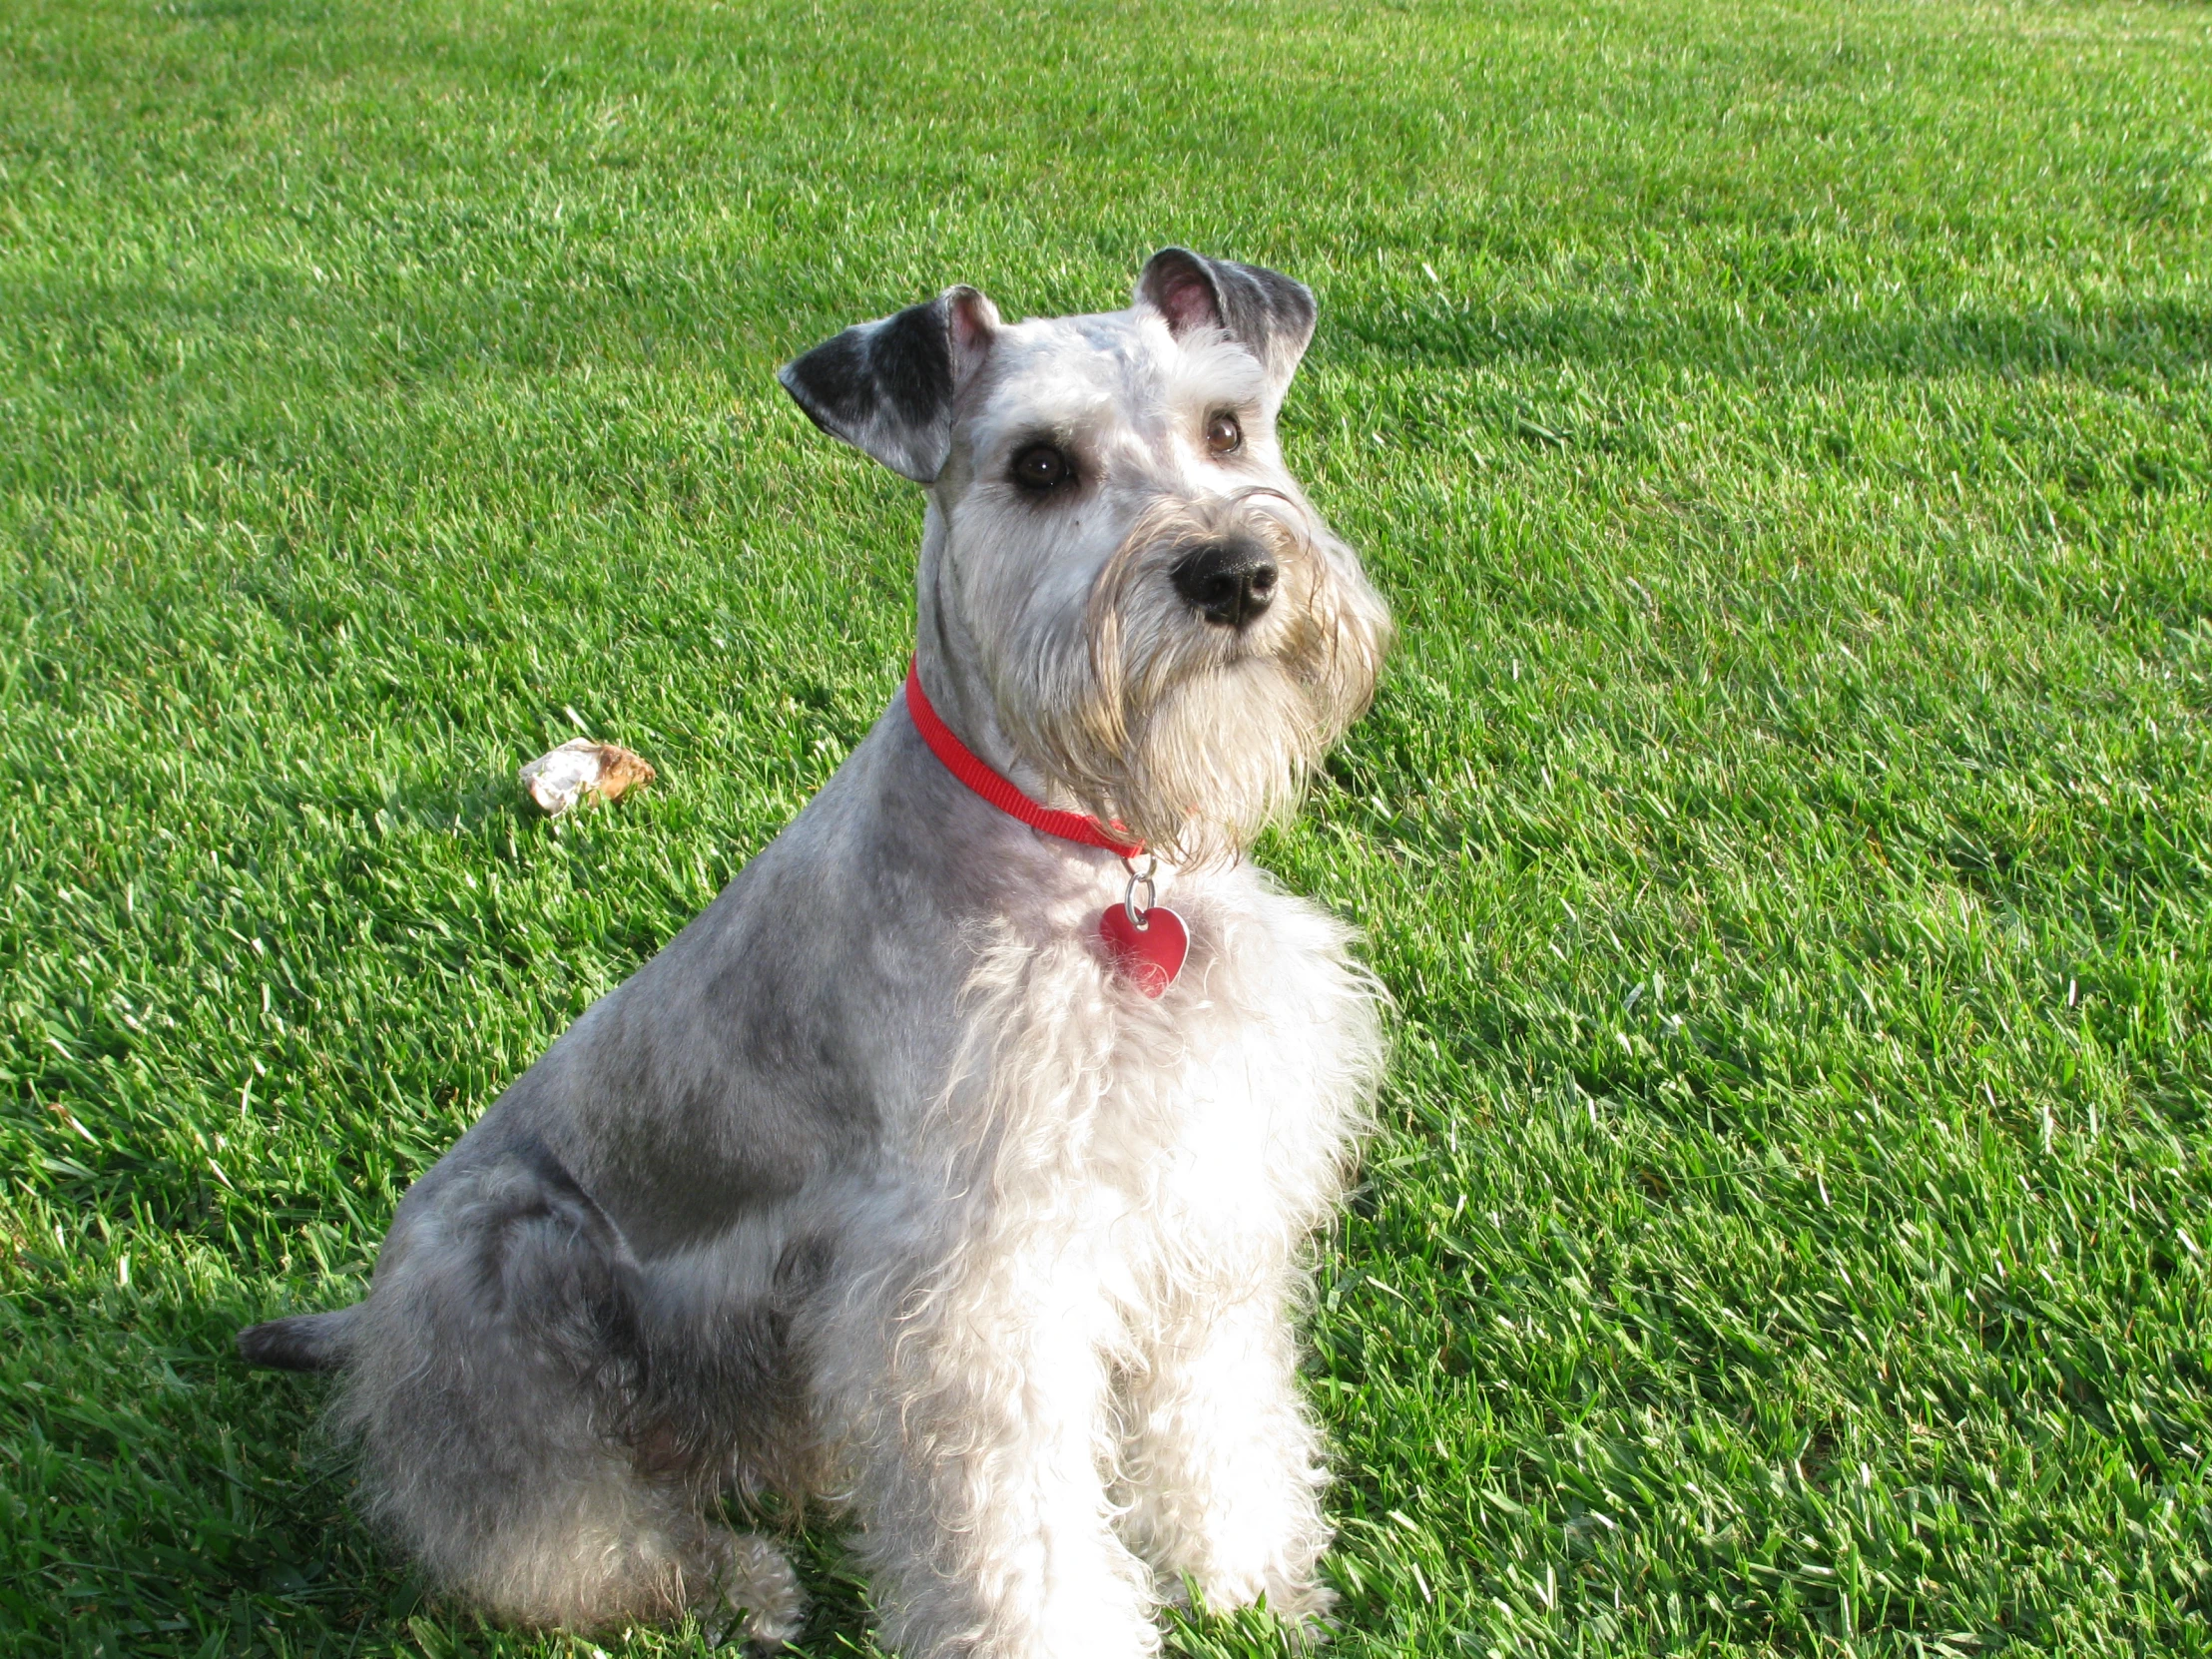 an older dog sitting in a grassy field